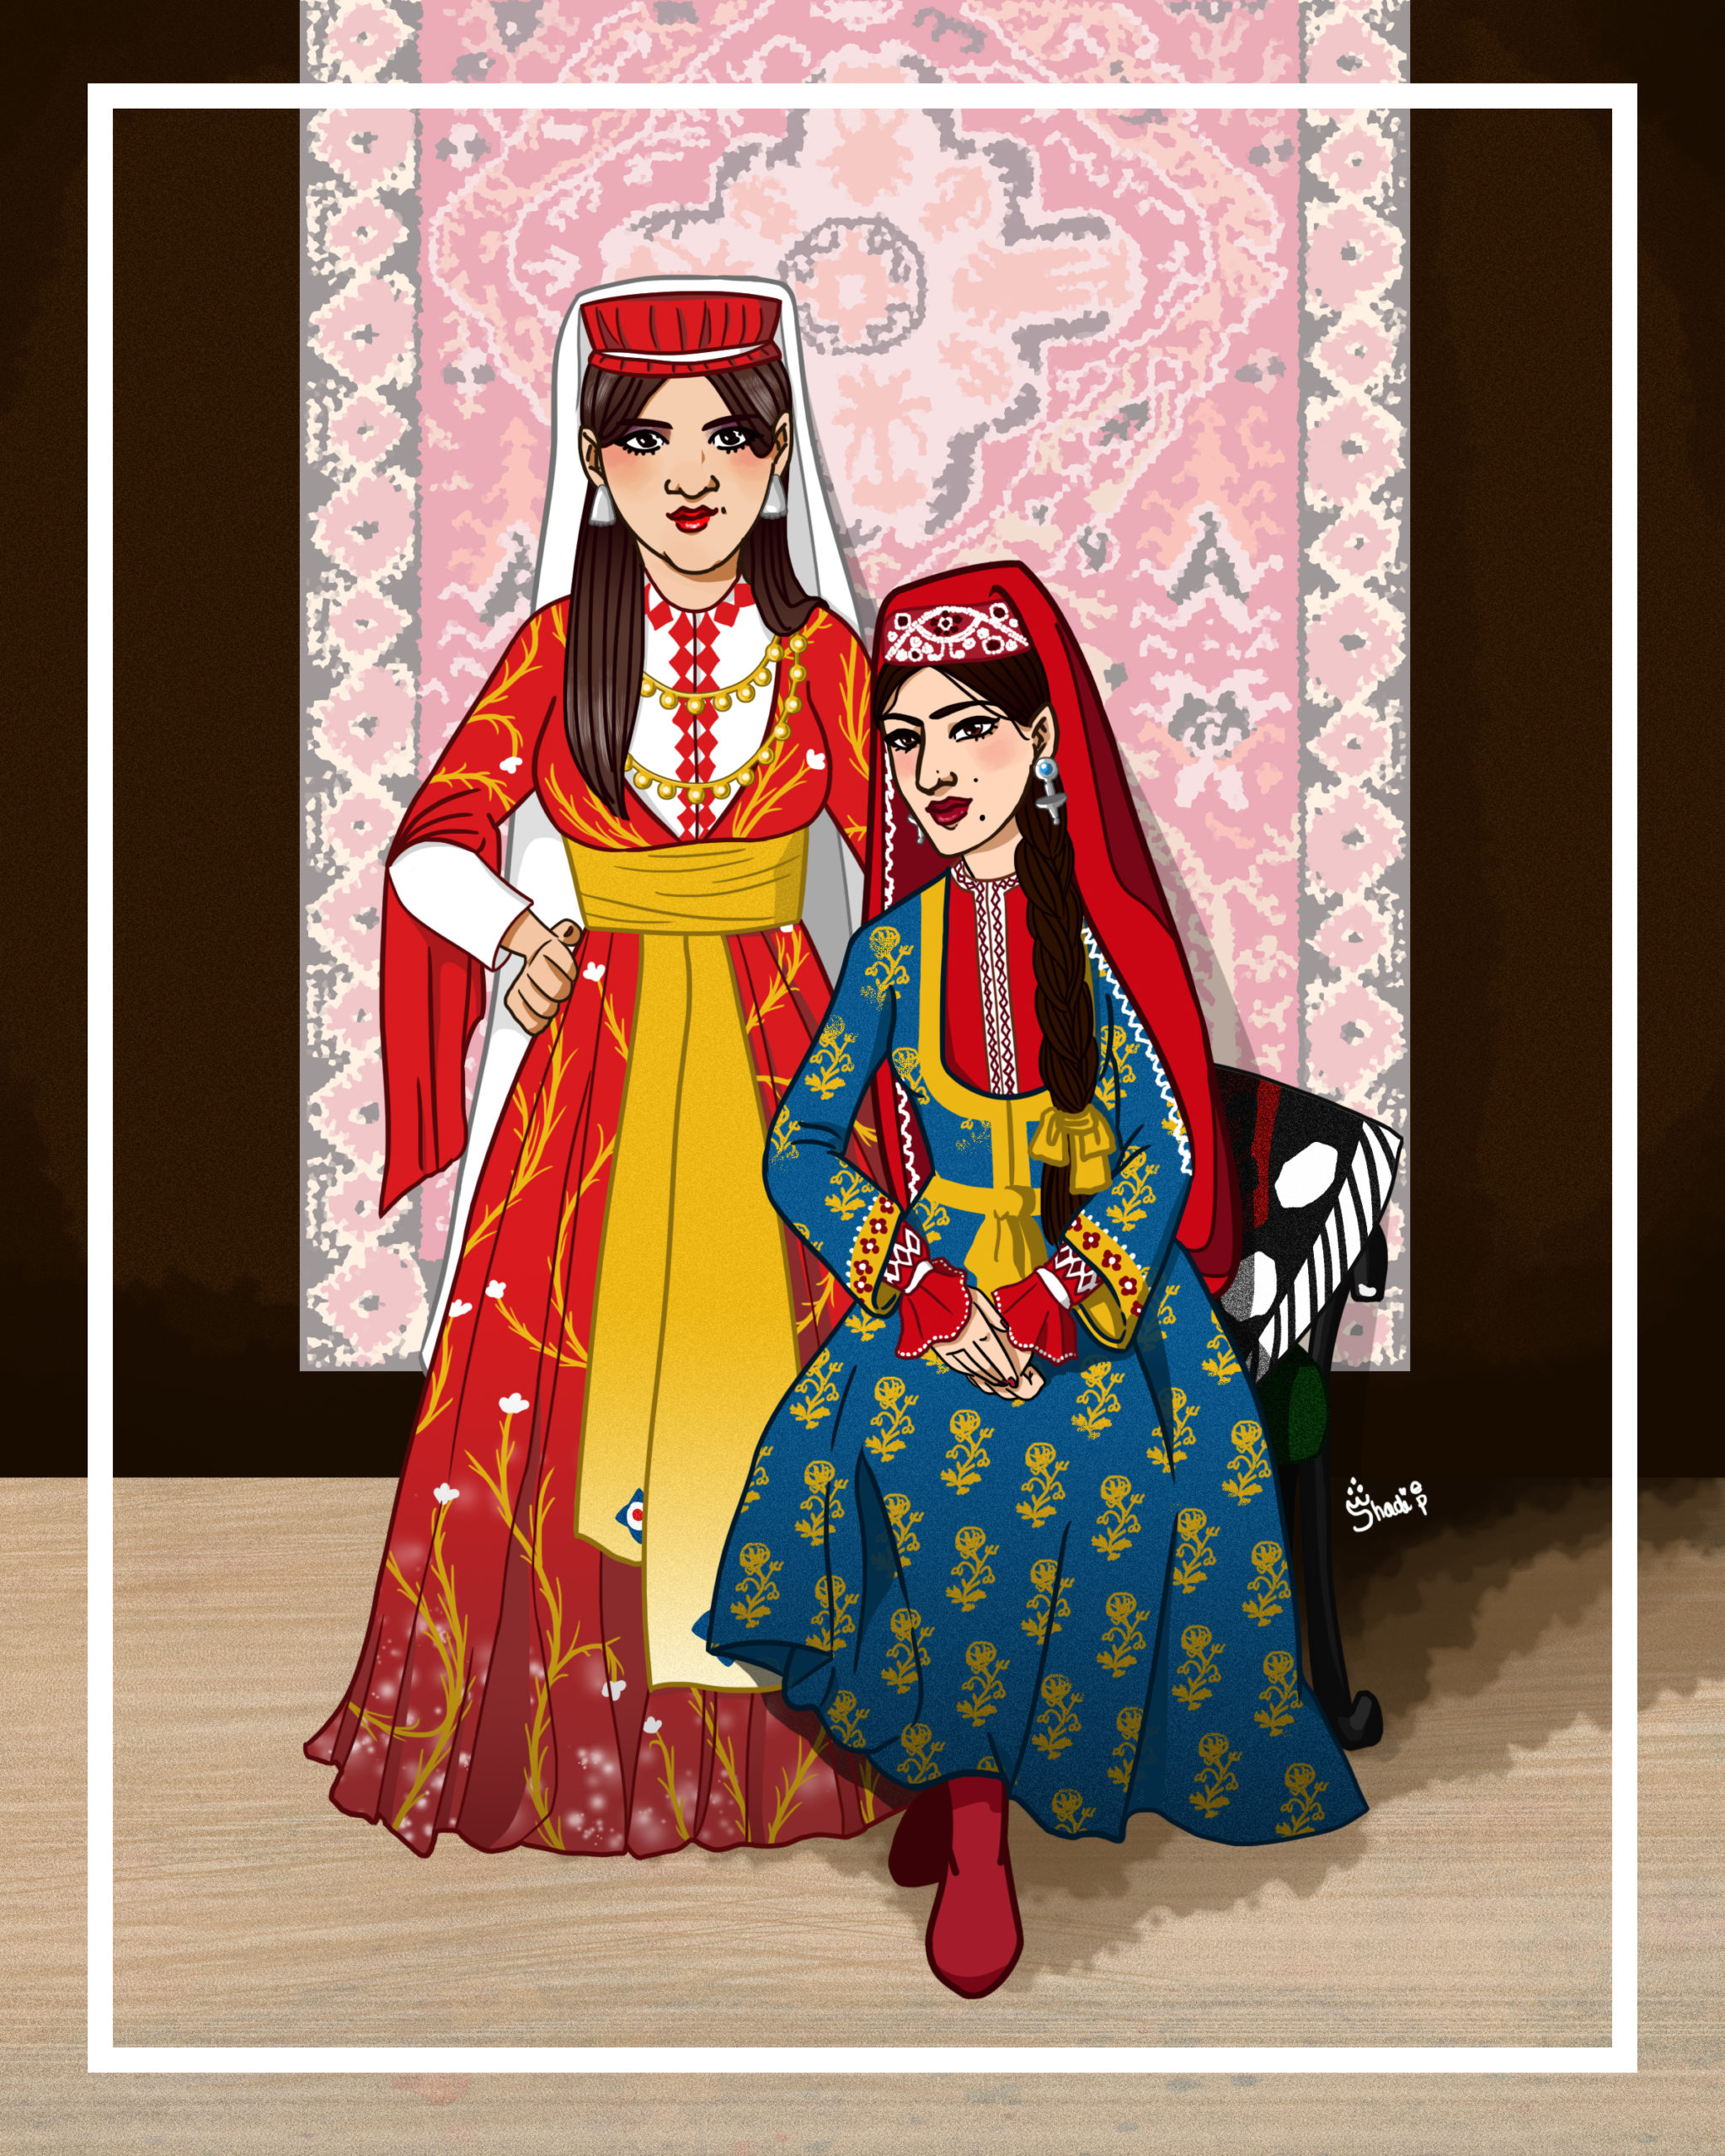 Dessin de deux femmes en vêtements traditionnels arméniens